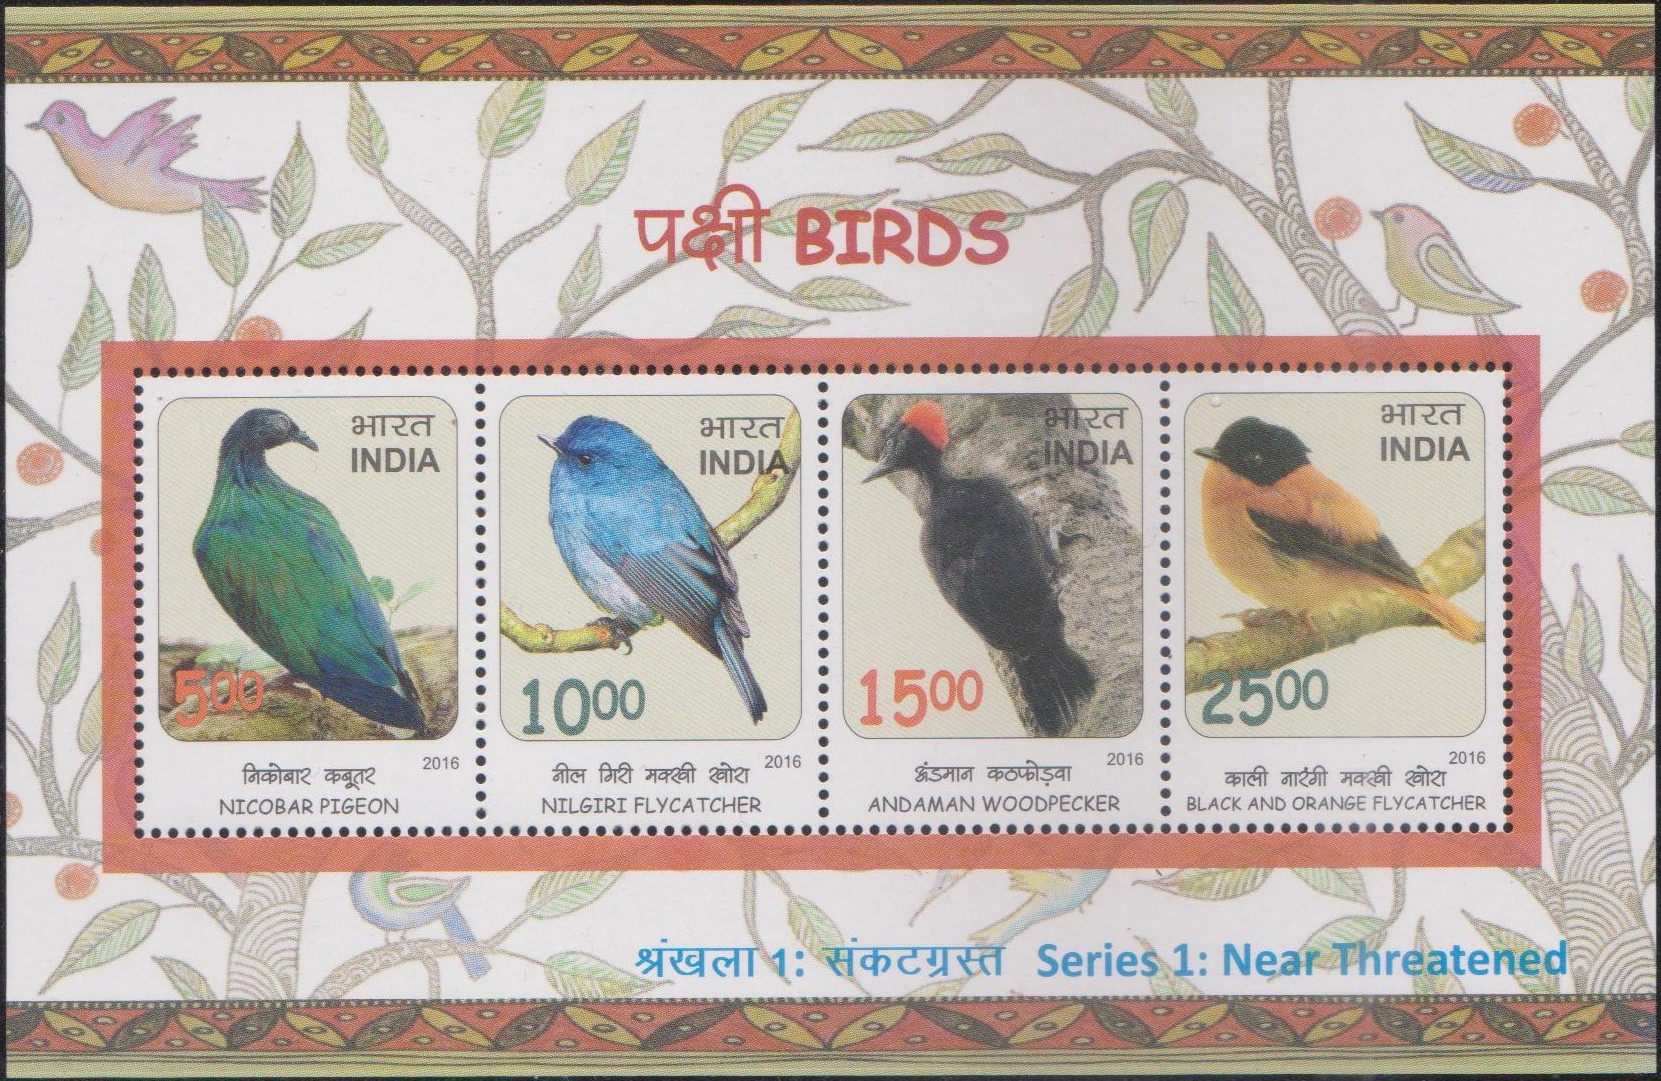 Nicobar pigeon, Nilgiri & Black-and-orange flycatcher and Andaman woodpecker